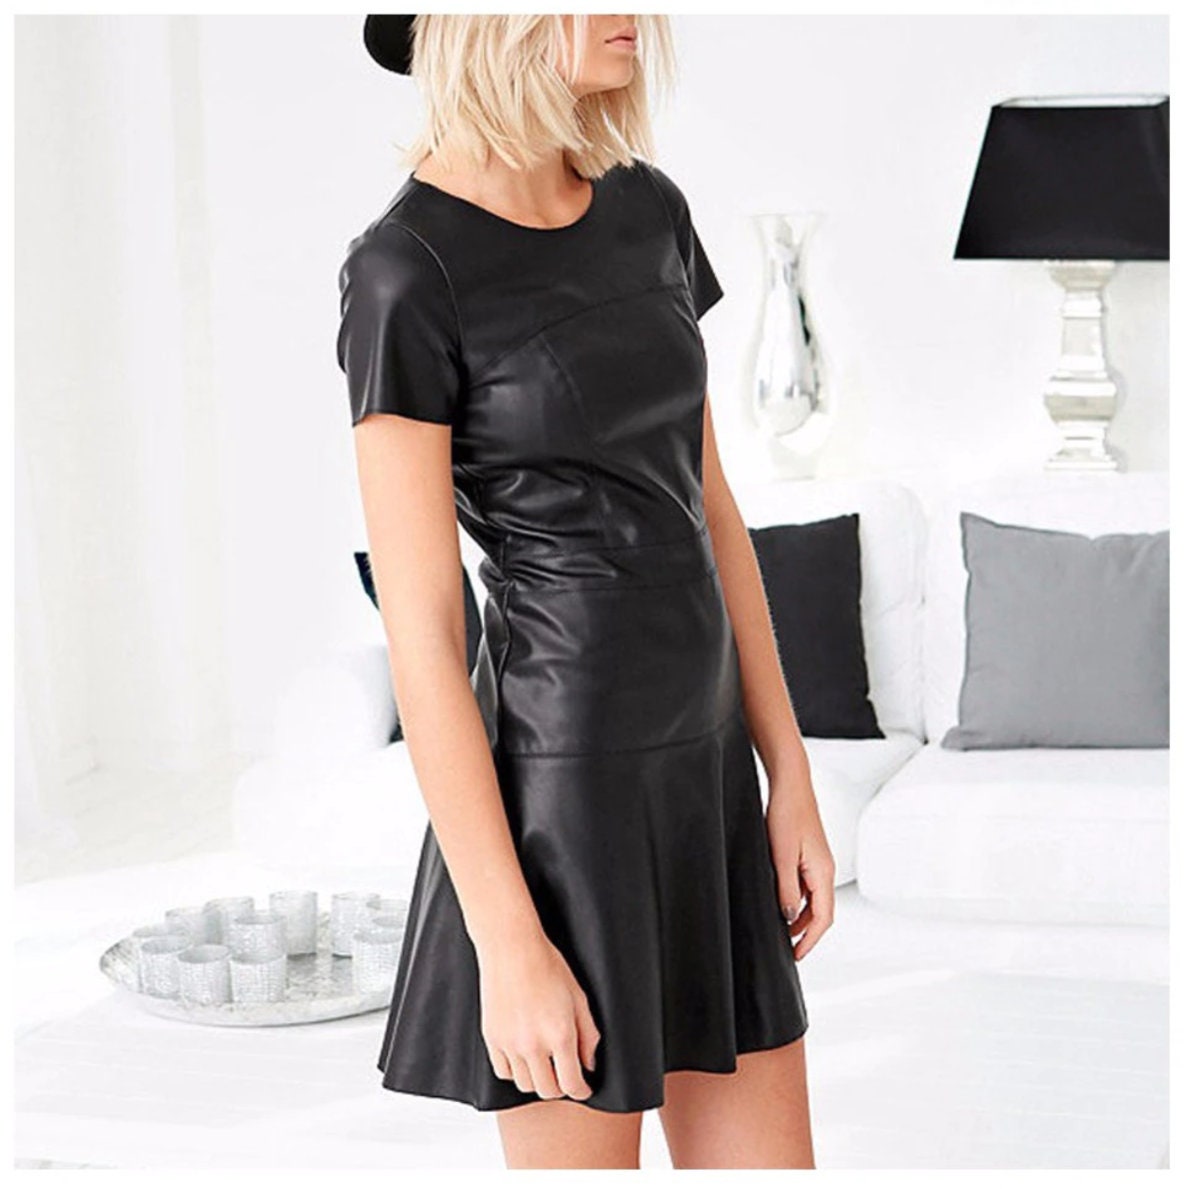 LINDSEY STREET Women Fashion Leather A-Line O-Neck Black Dress Casual Mini Dress Short Sleeve Sexy Casual Dress